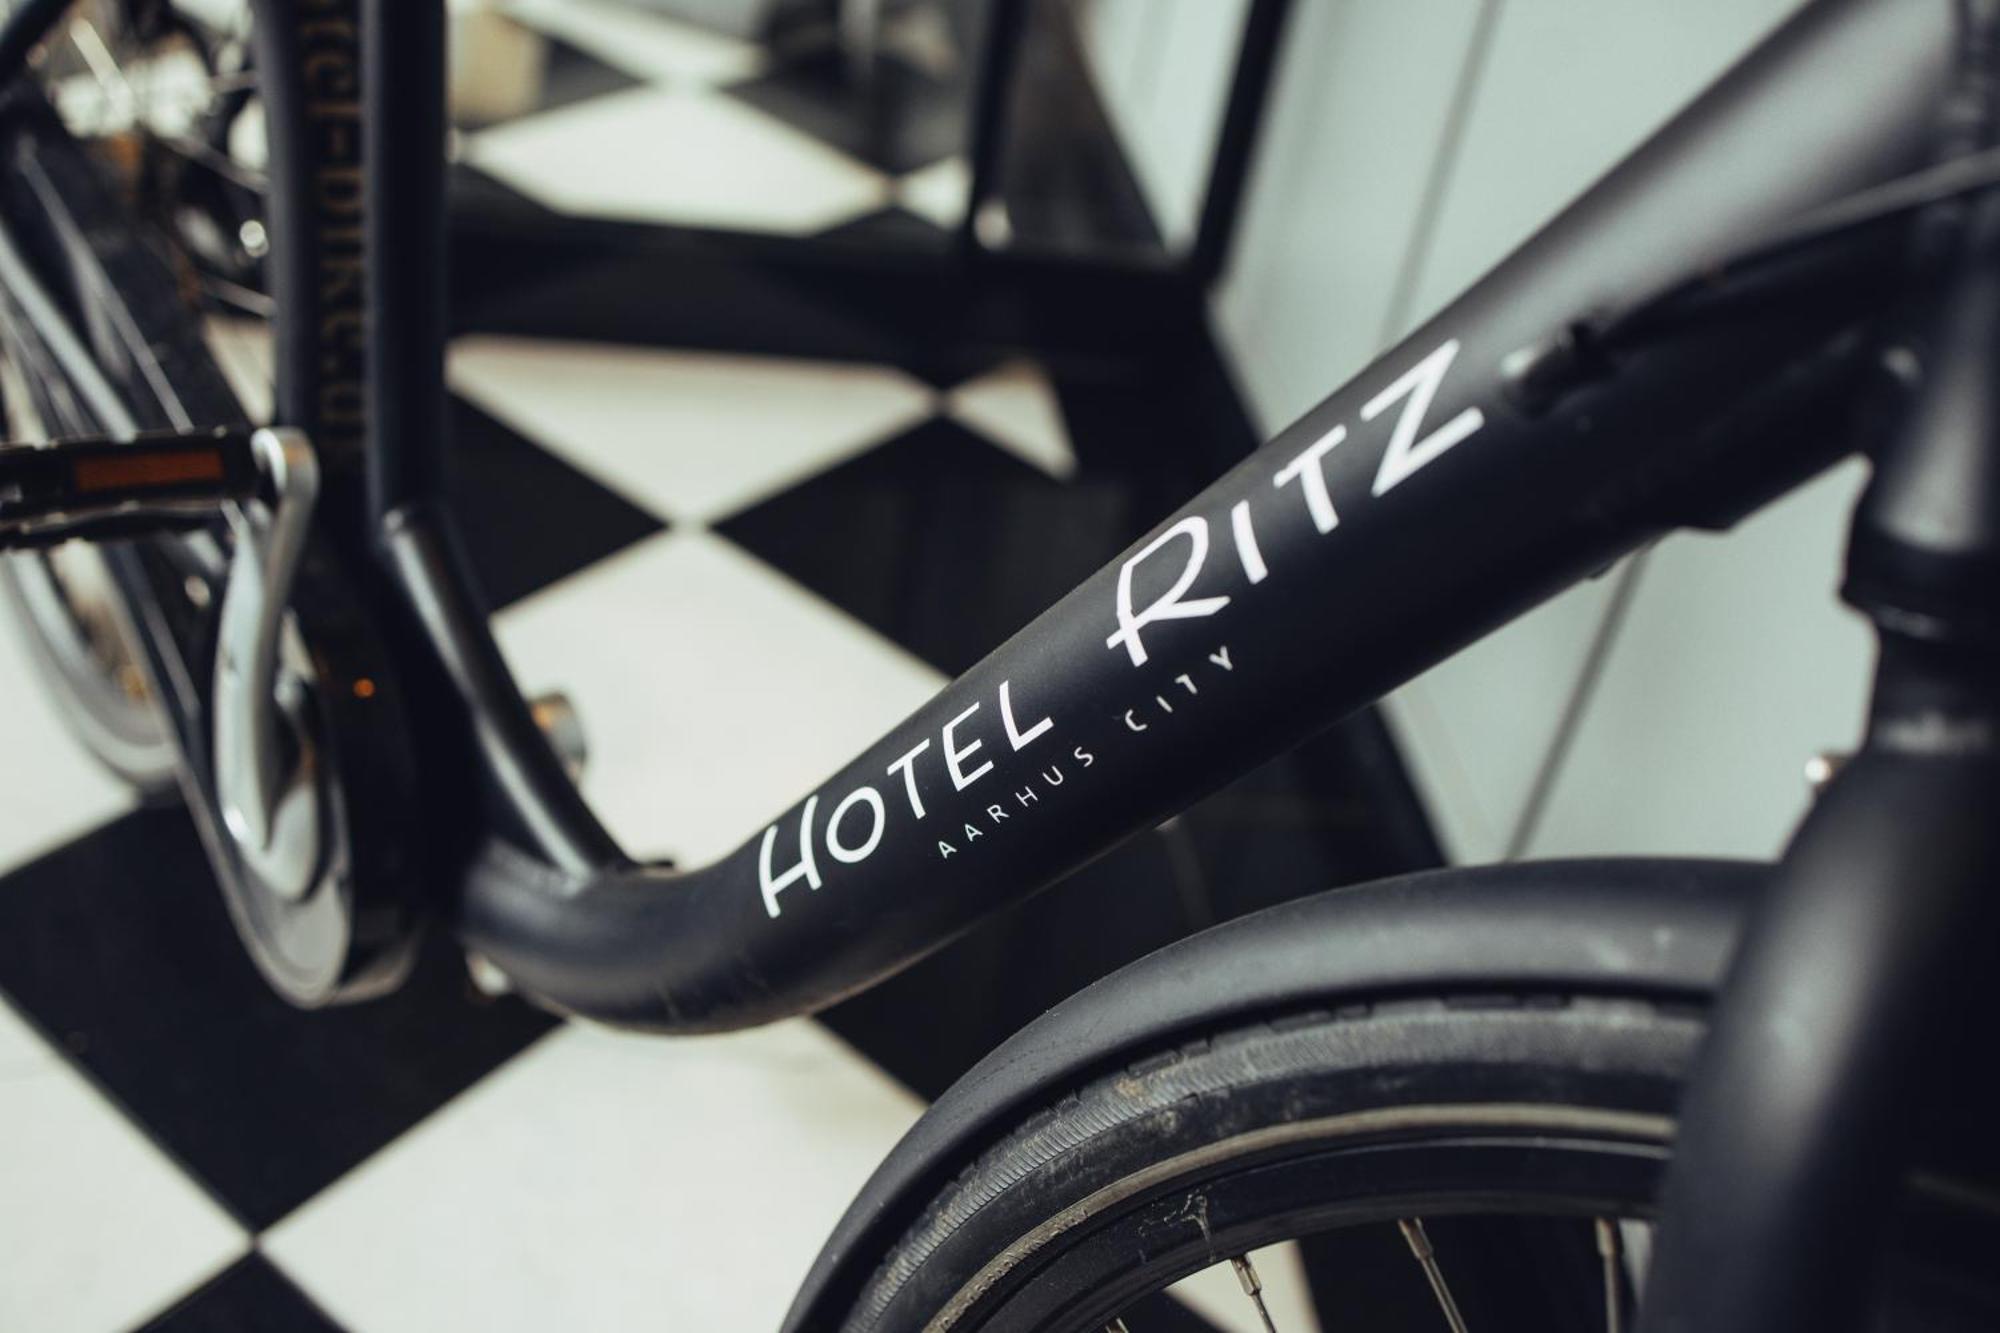 Milling Hotel Ritz Aarhus City Esterno foto